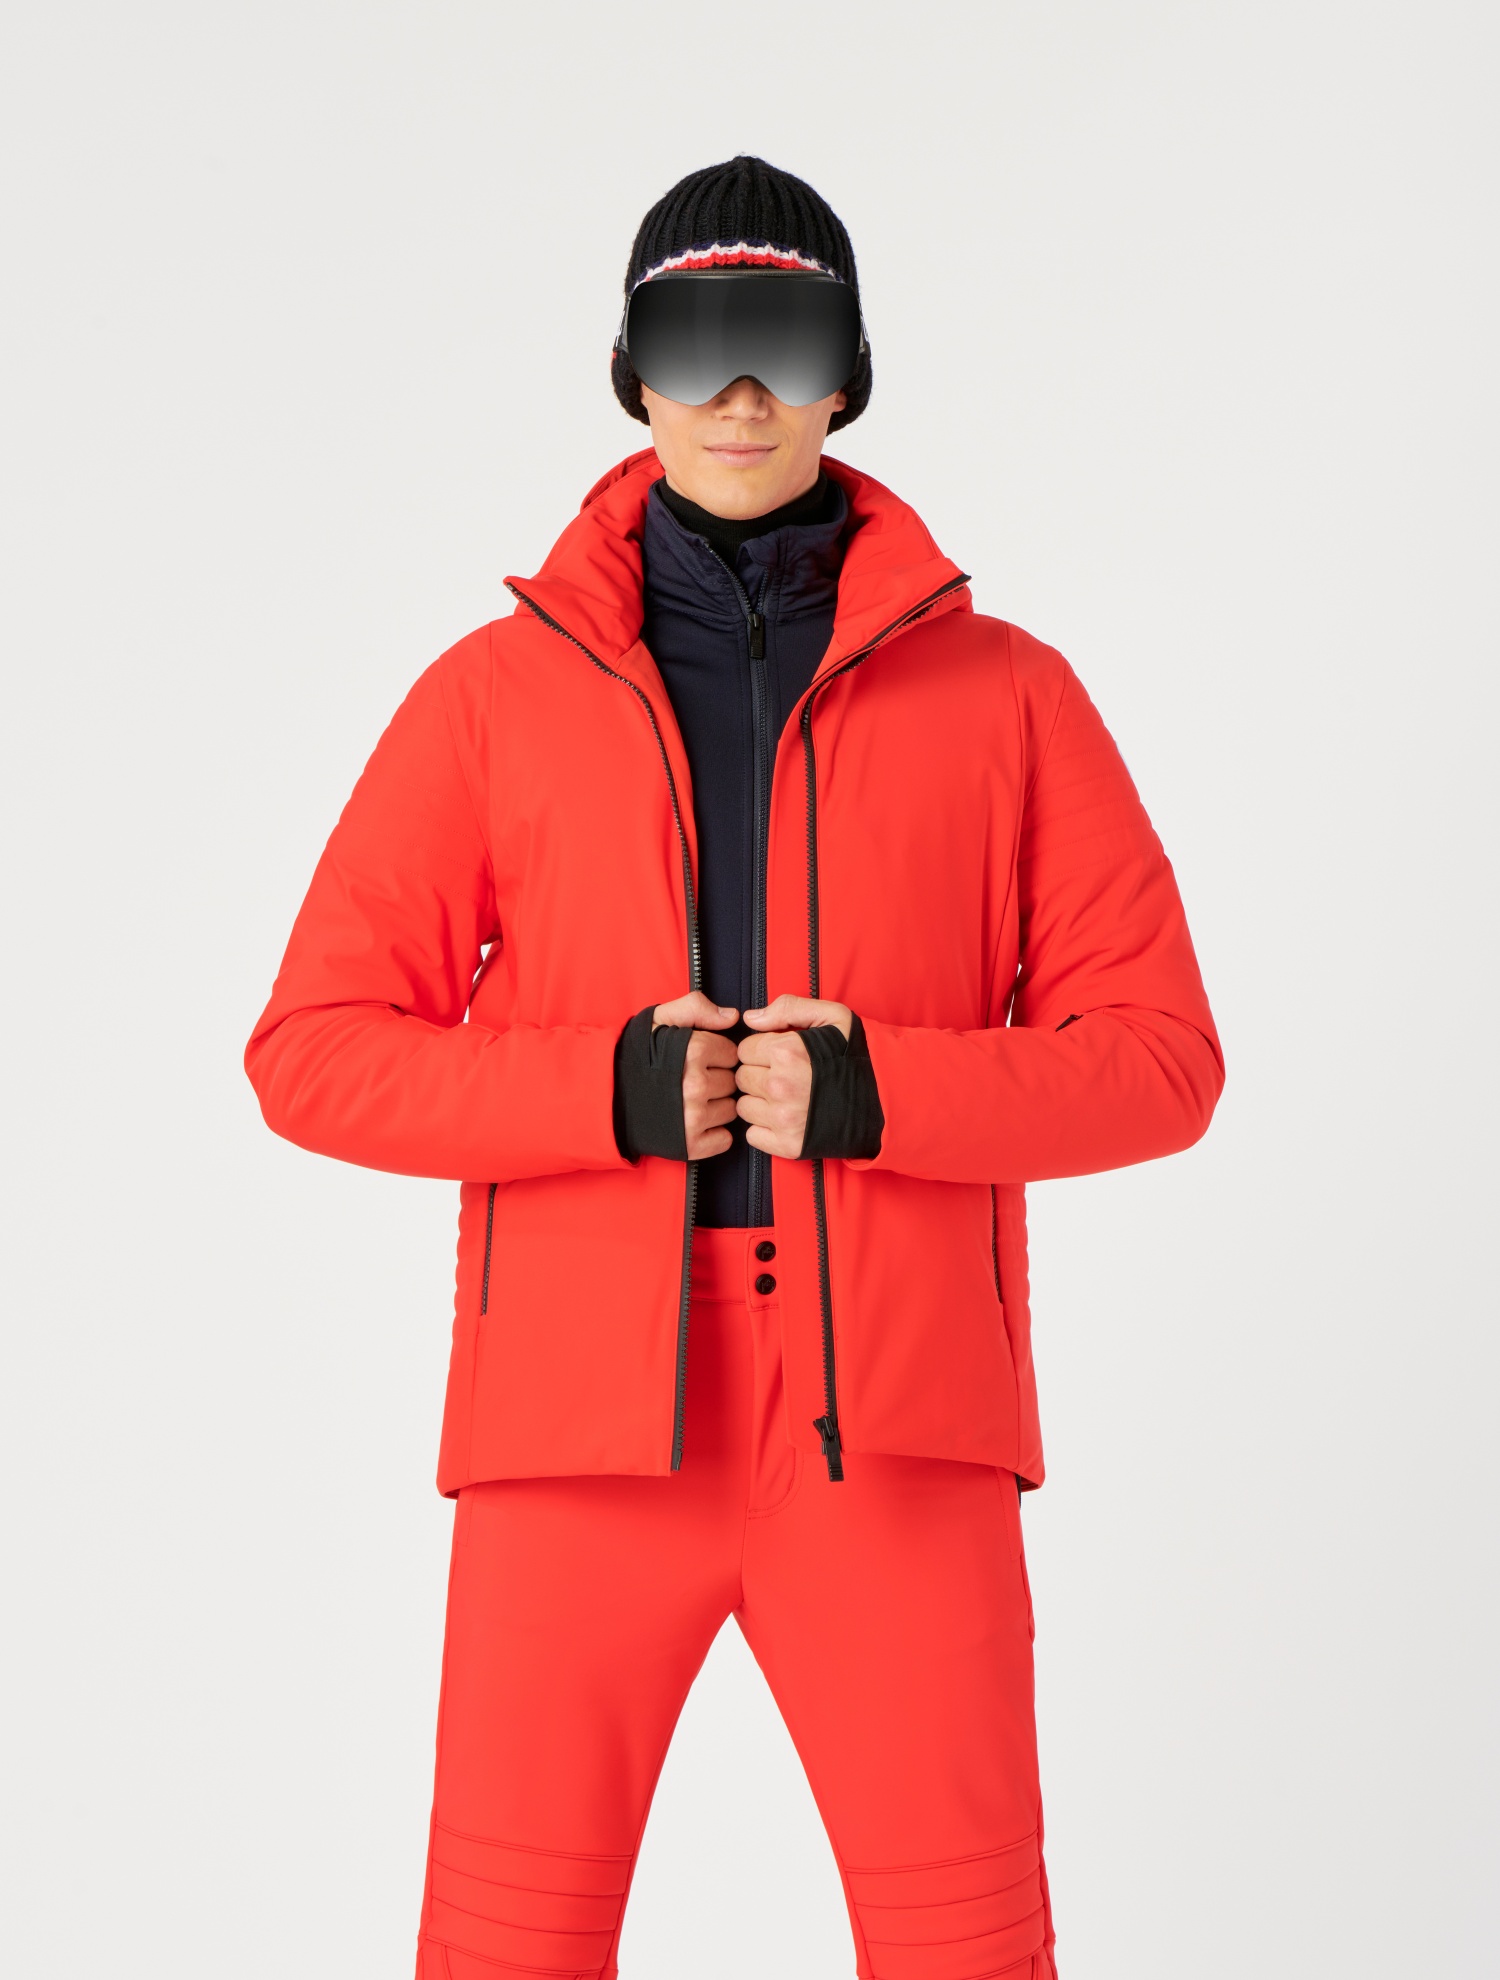 Whistler jacket : men's ski jacket filled with duck down